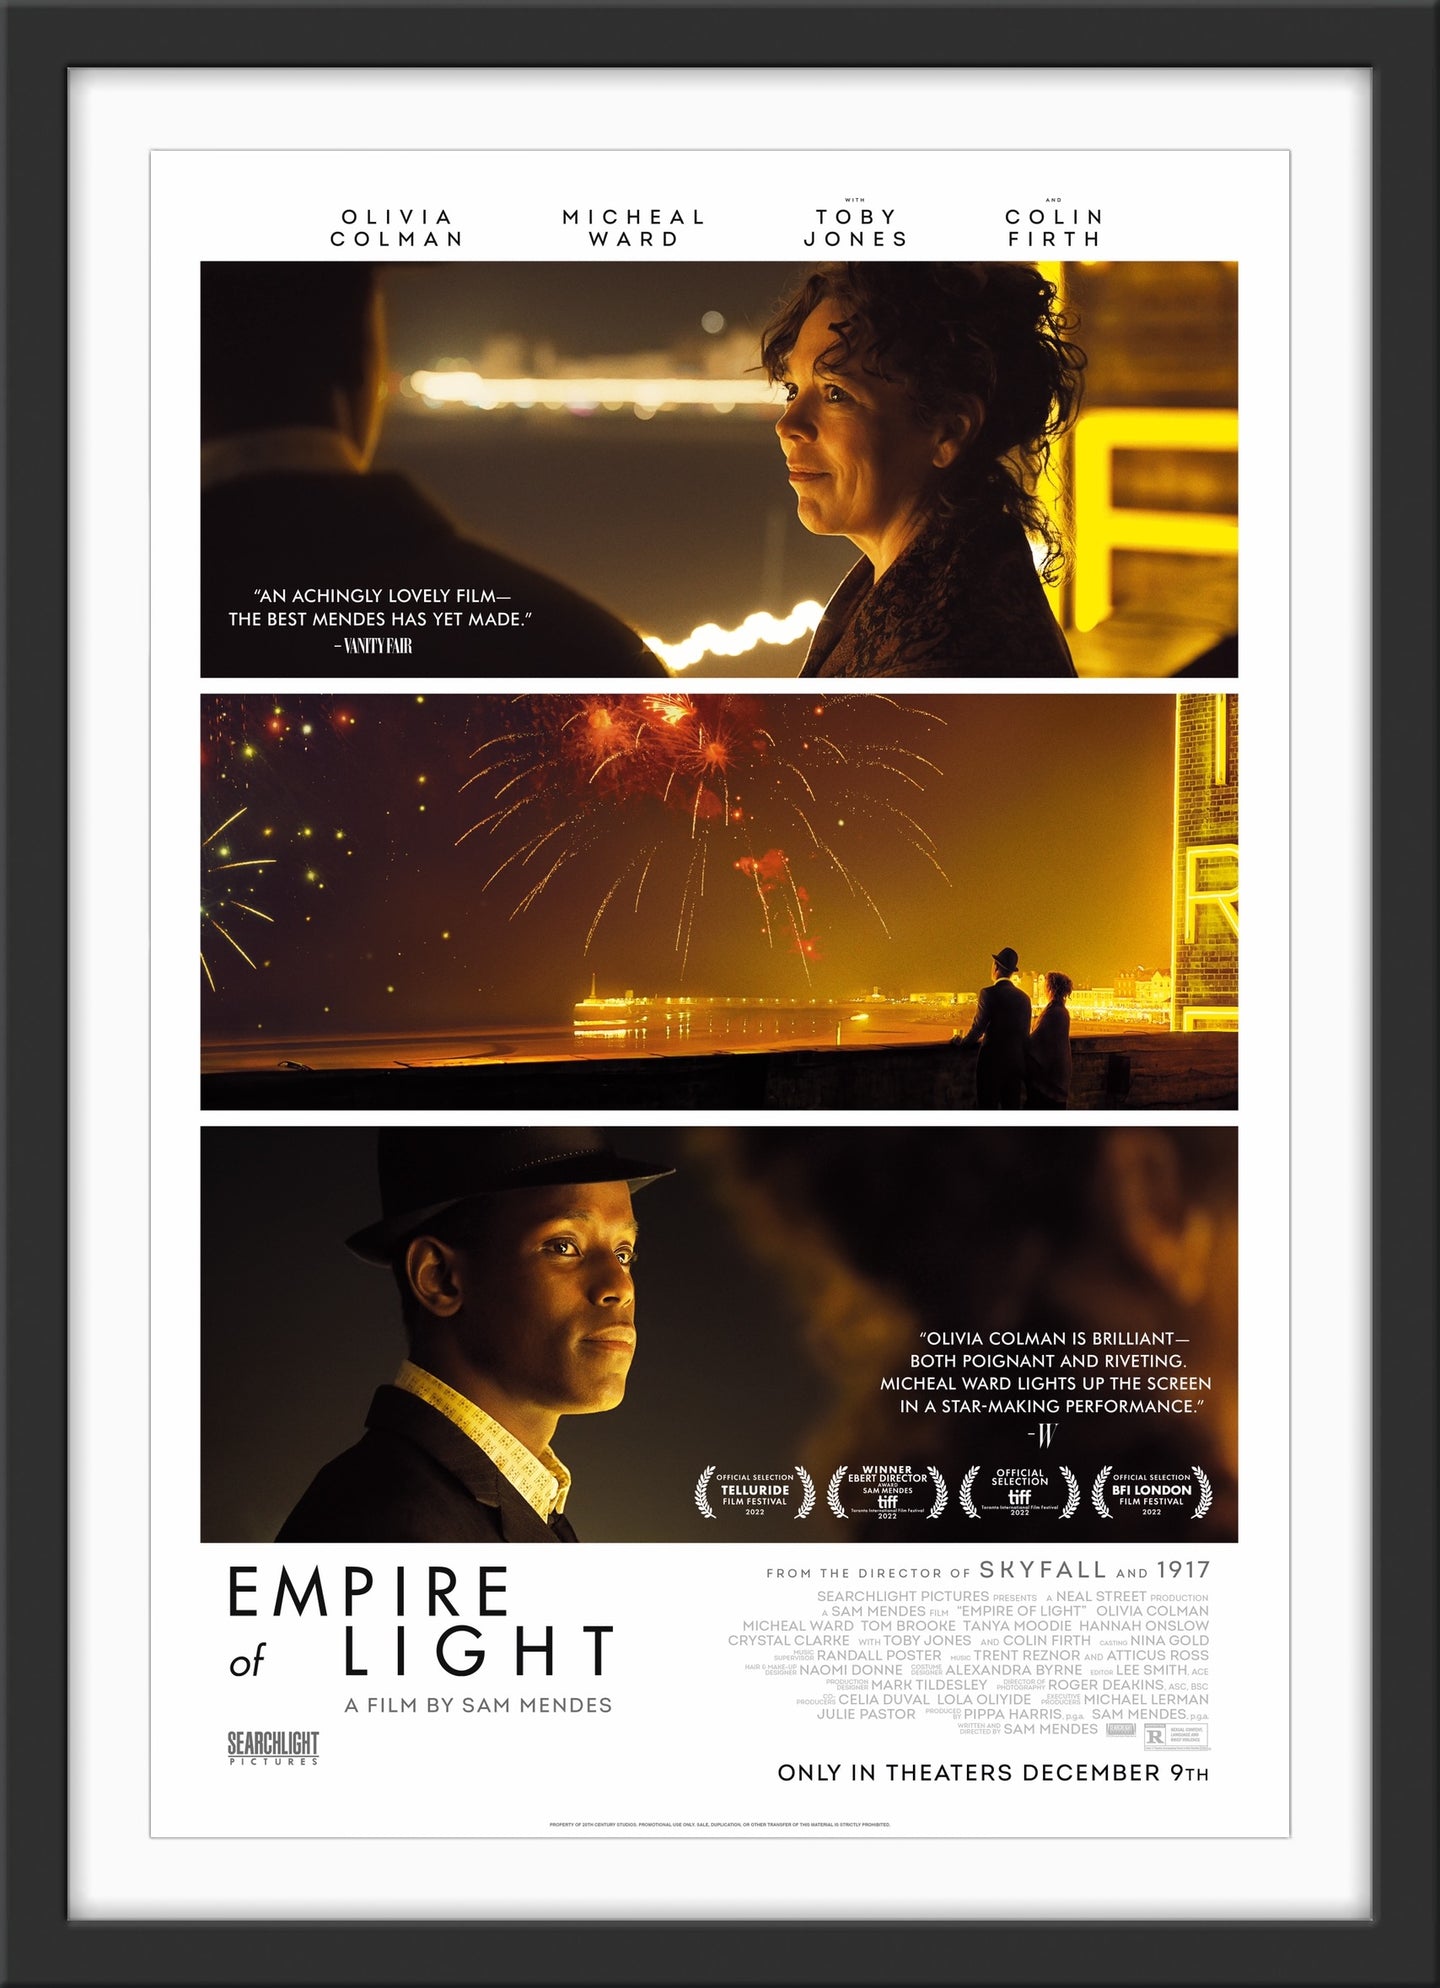 An original movie poster for the Sam Mendes film Empire of Light